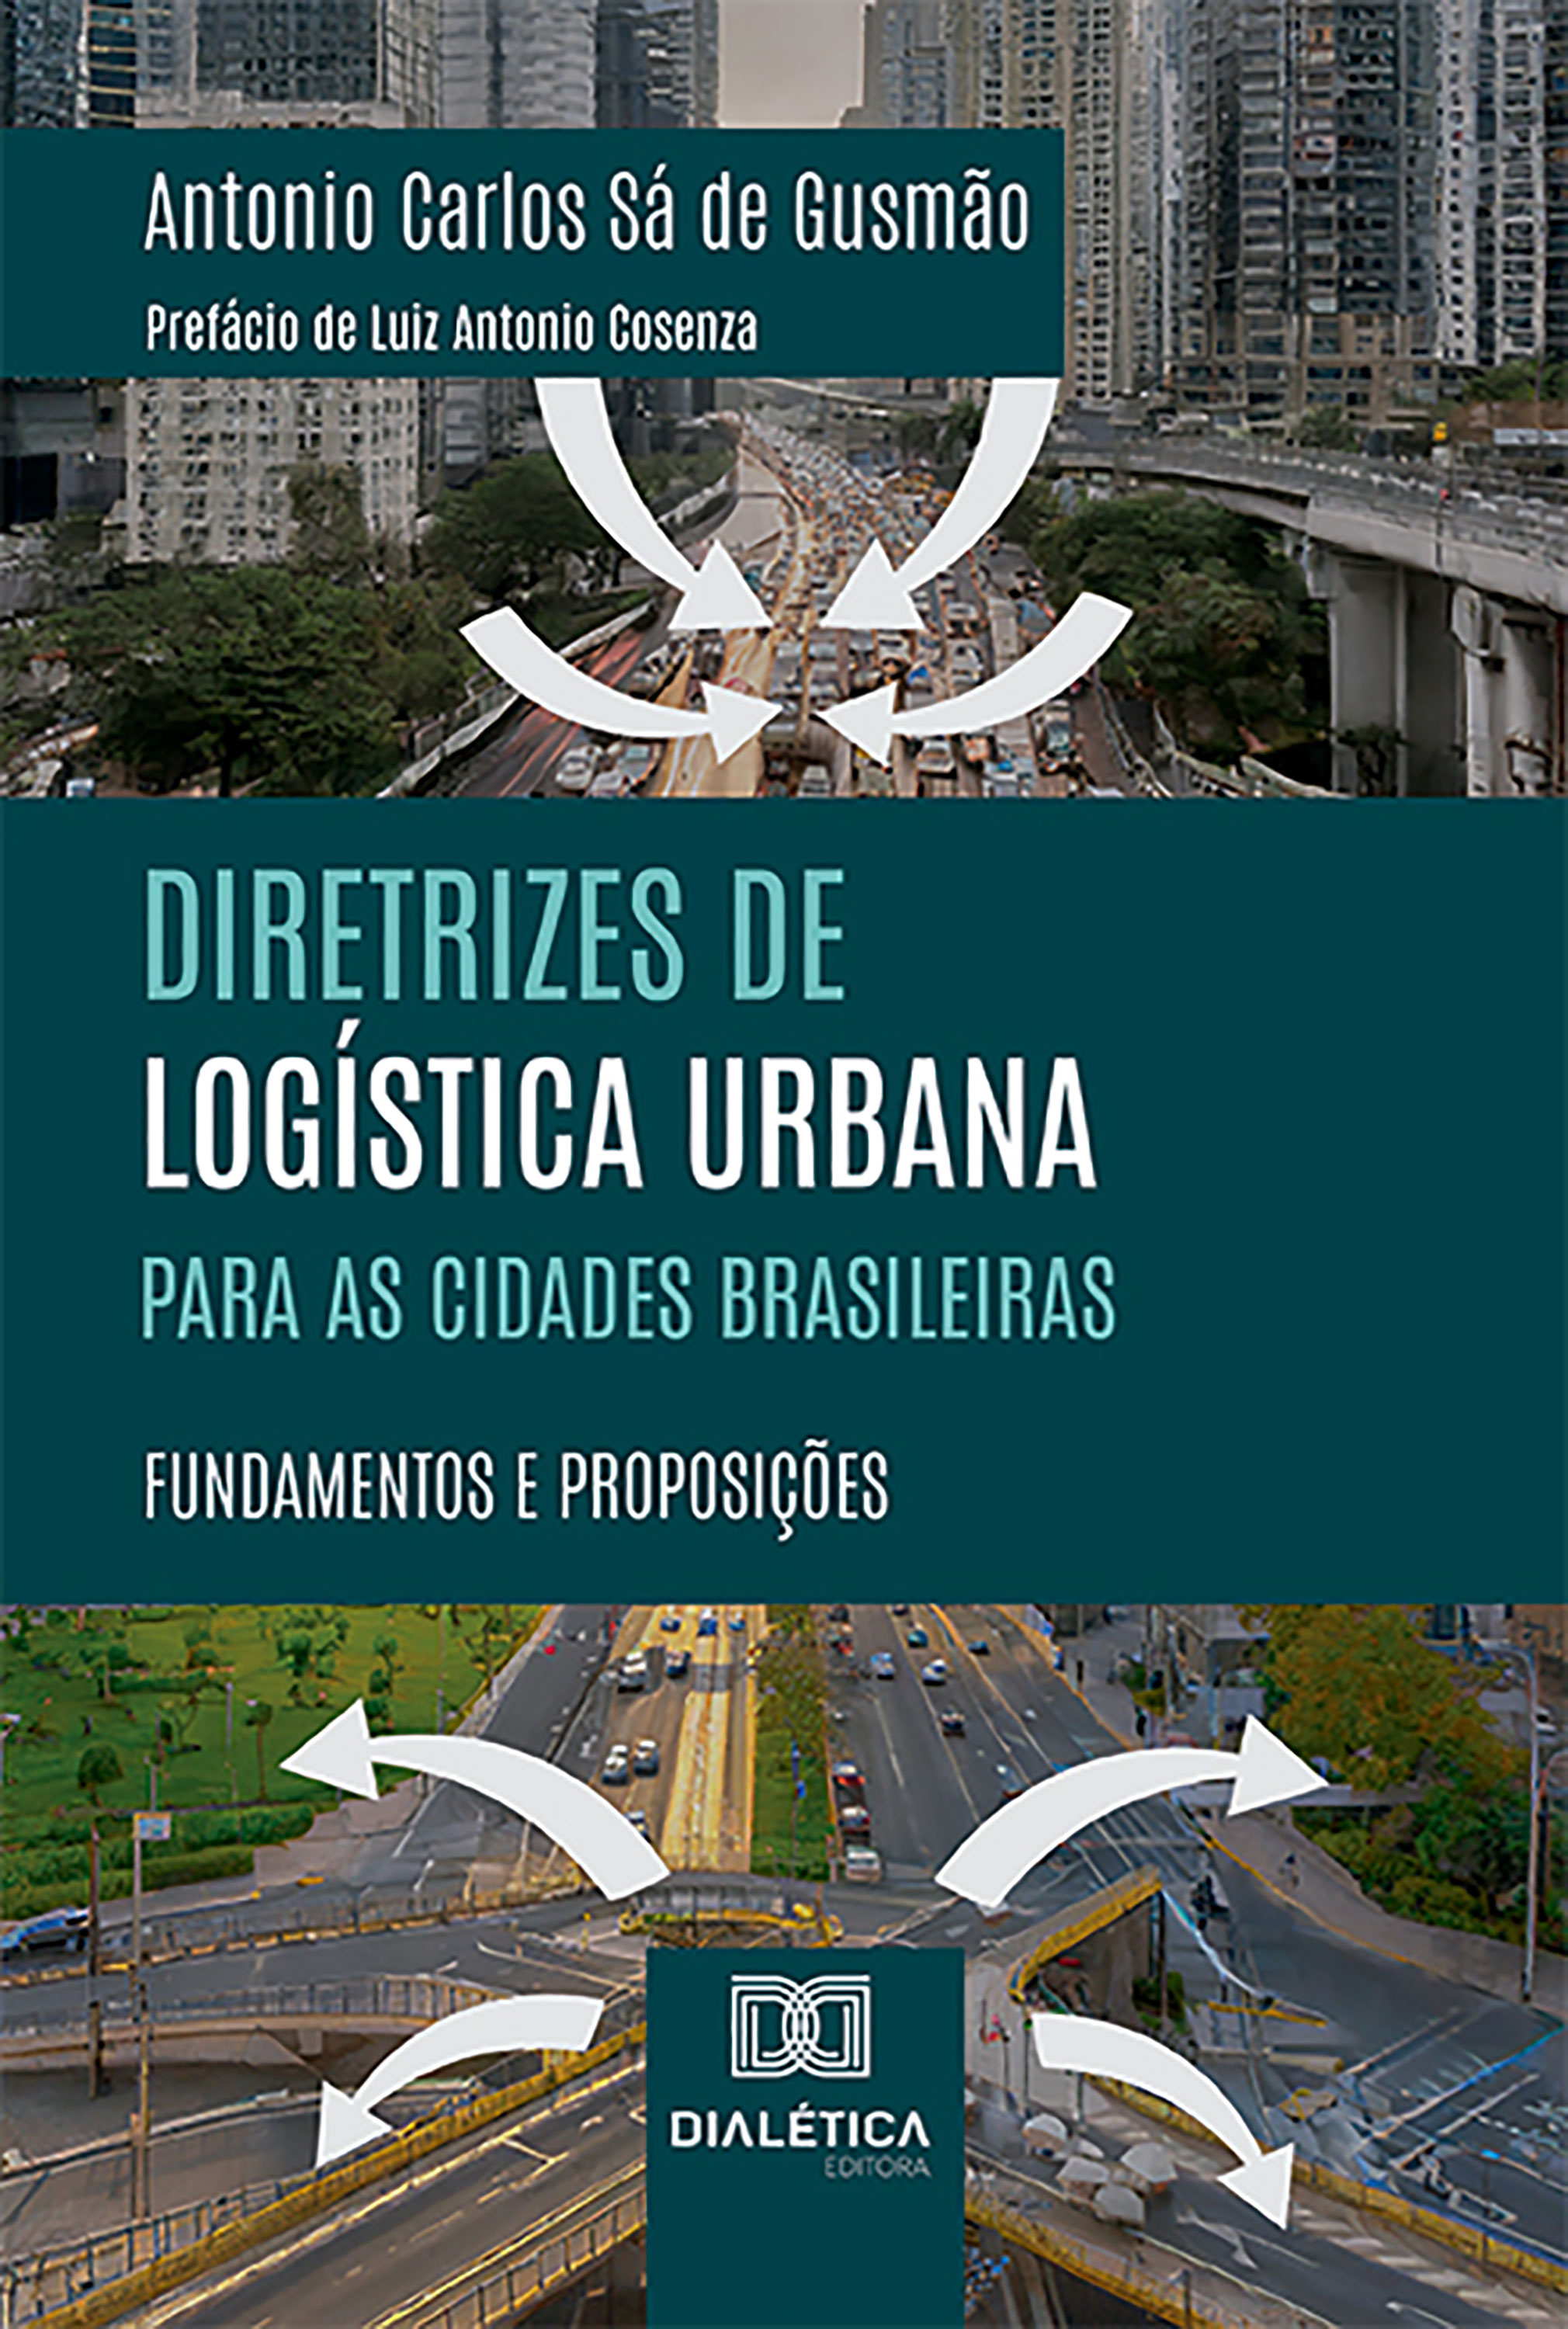 Diretrizes de Logística Urbana para as Cidades Brasileiras